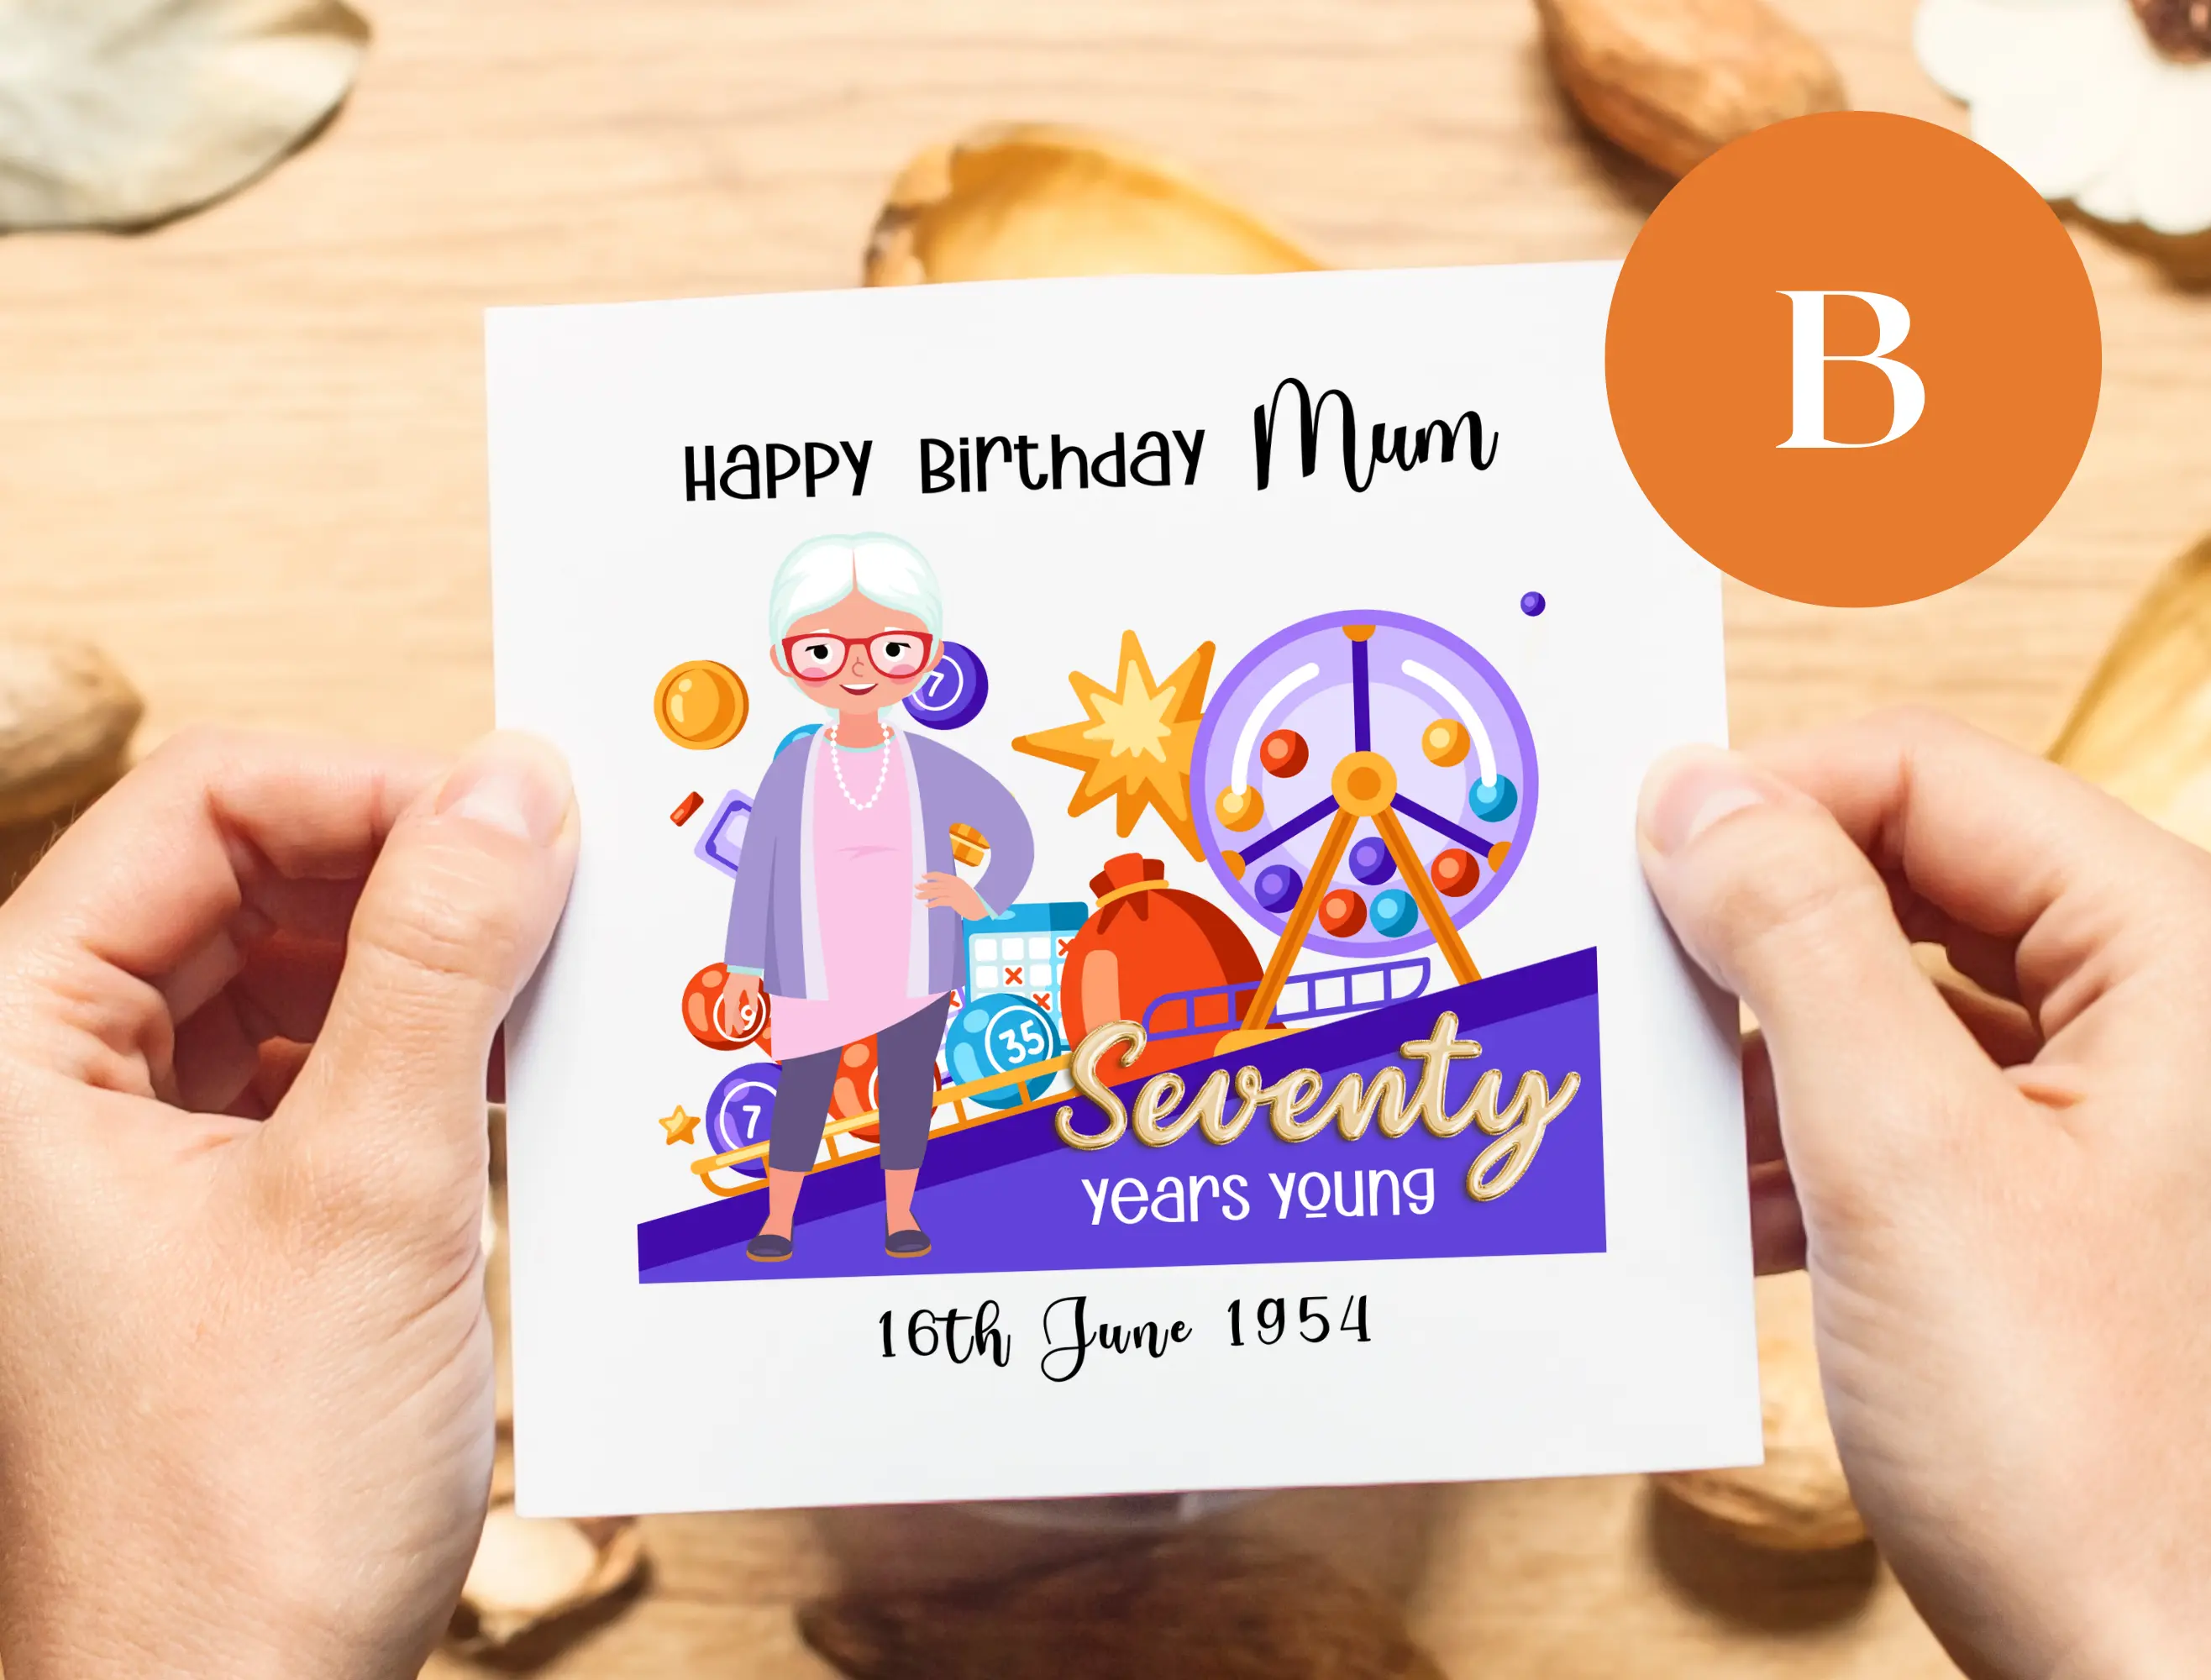 Personalised 70th birthday card for mum bingo holiday vintage